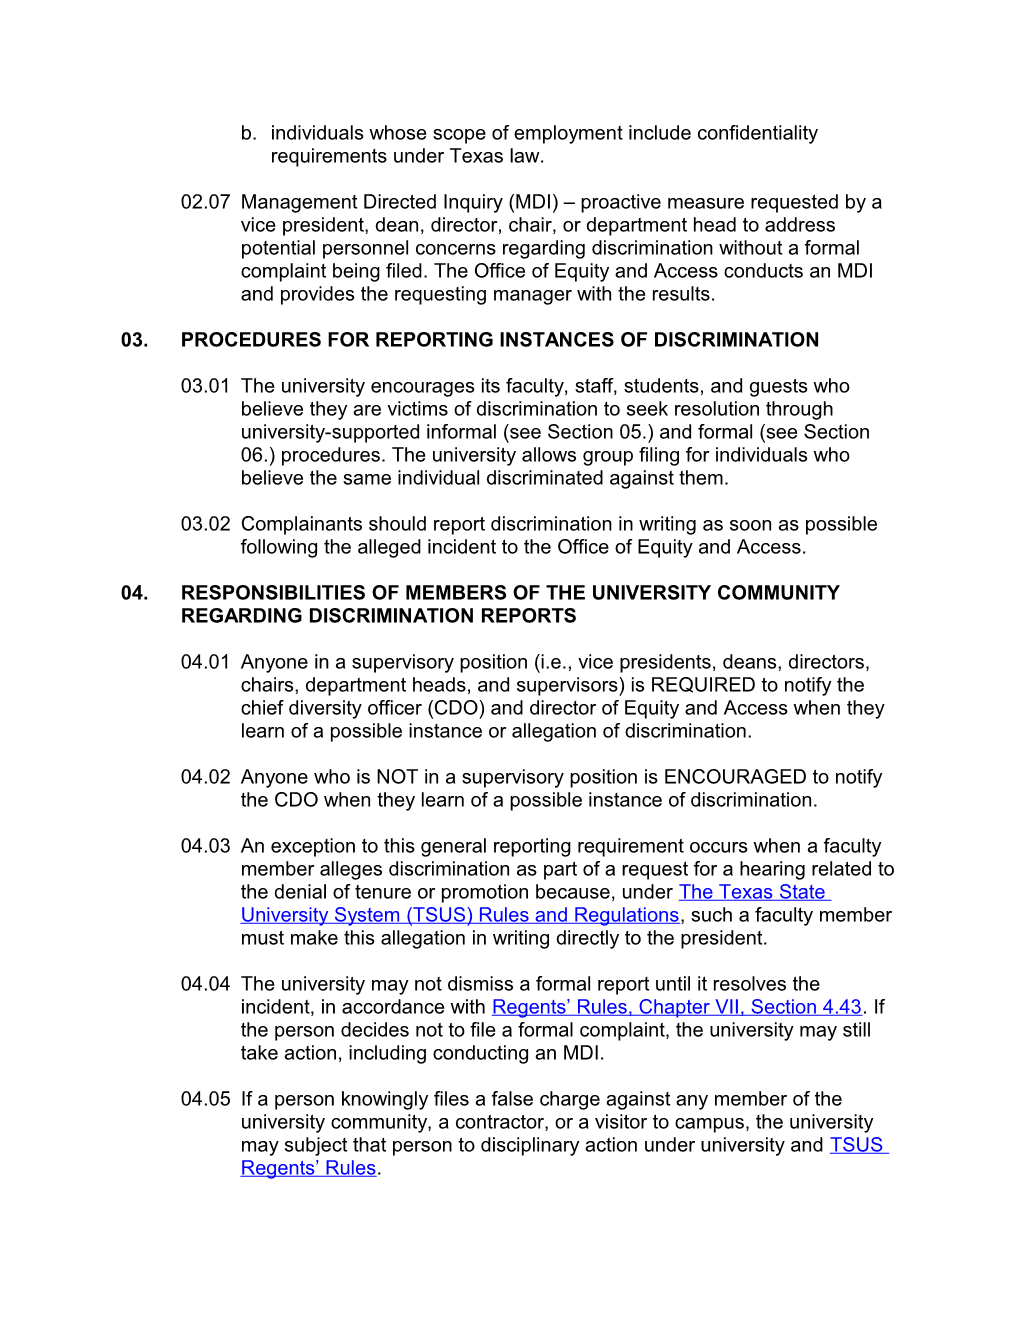 Prohibition of Discriminationupps No. 04.04.46